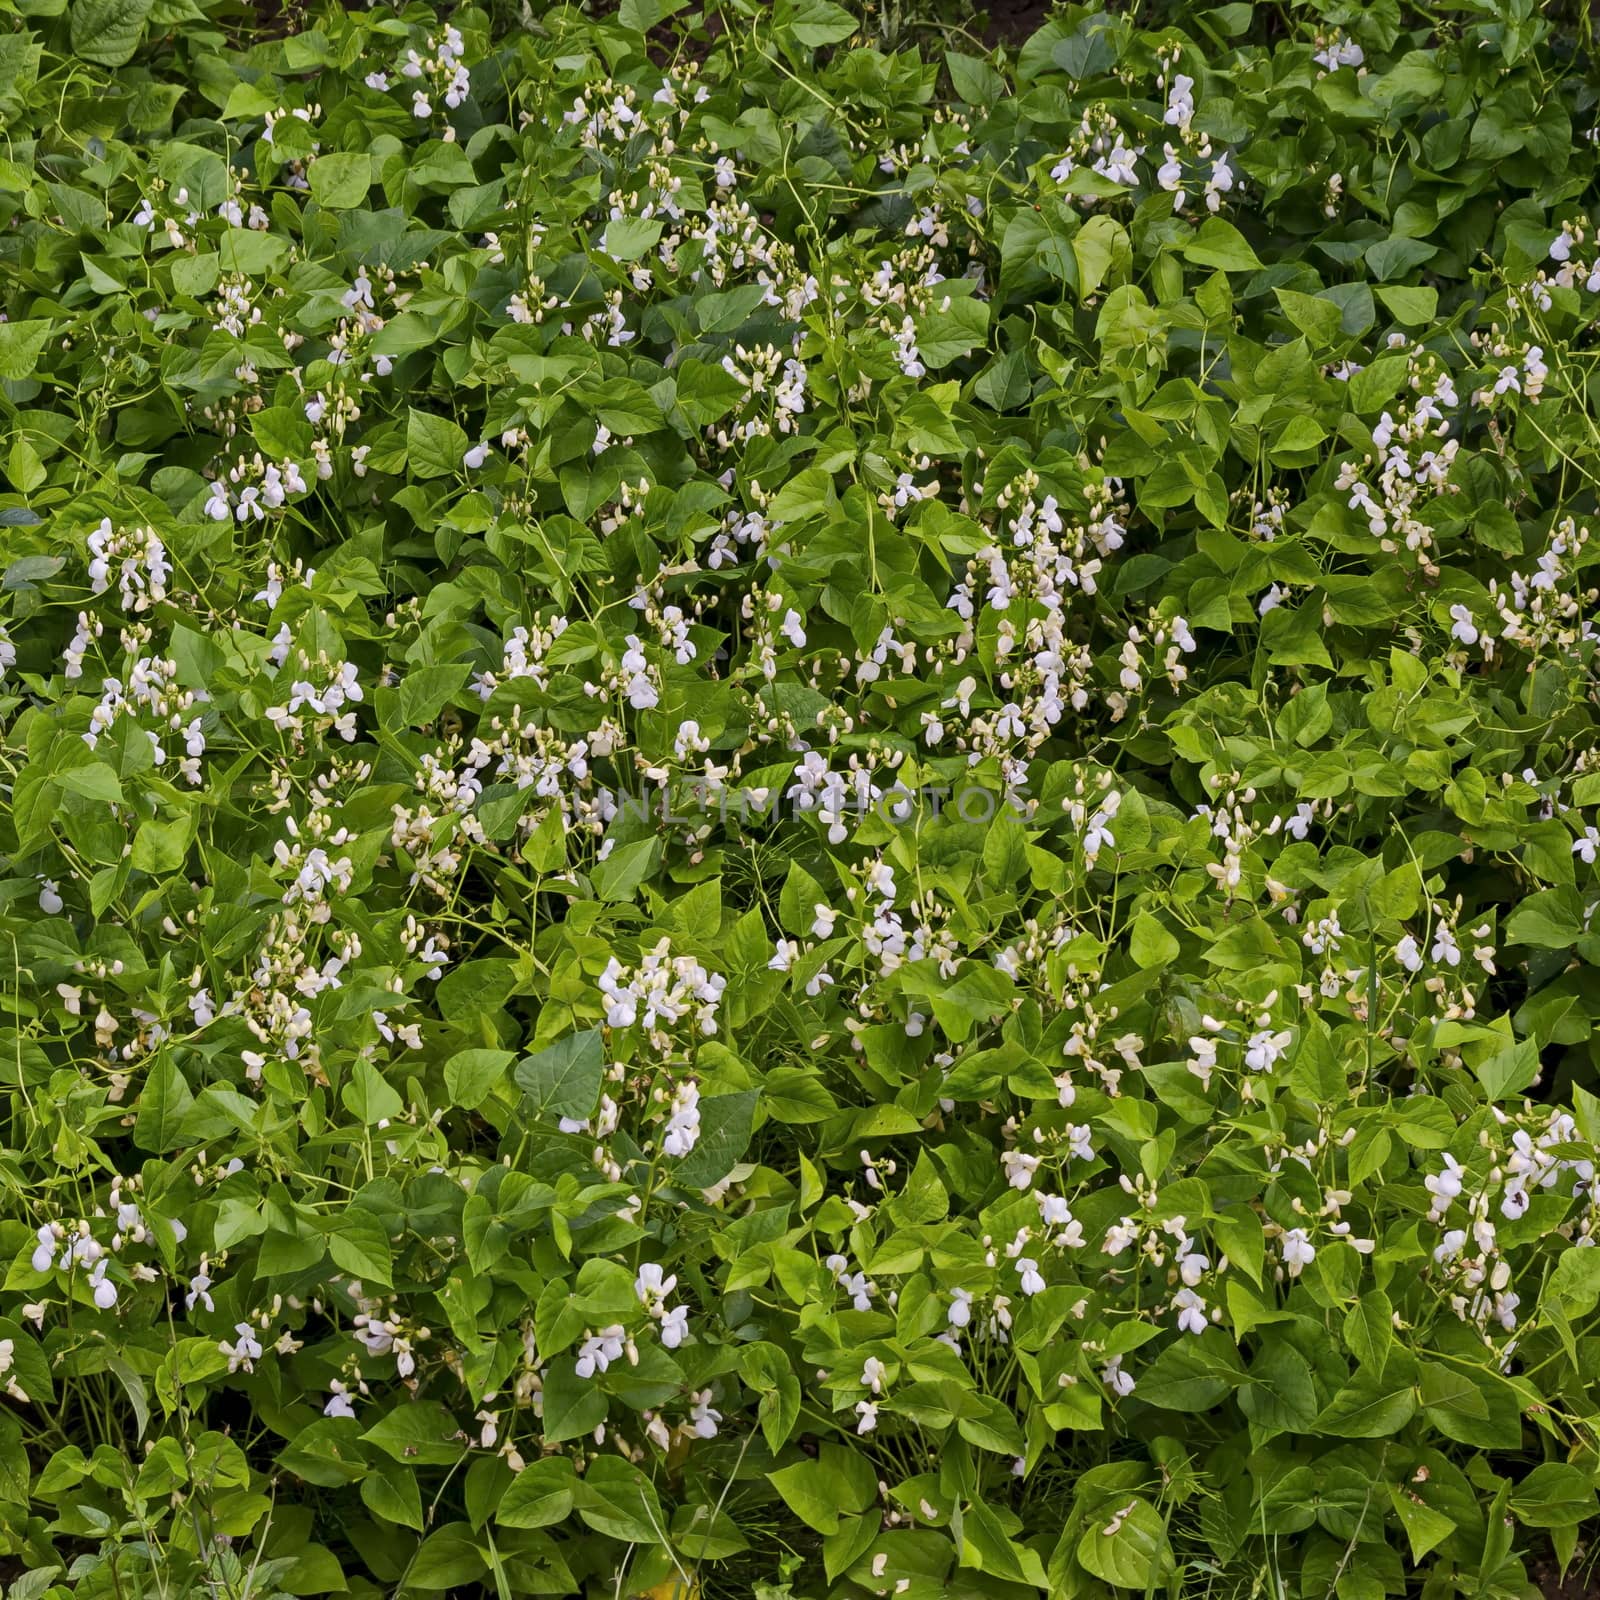 Flowers and leaves of fresh green beans plant or Phaseolus vulgaris in vegetables garden bed, Jeleznitsa, Vitosha mountain, Bulgaria